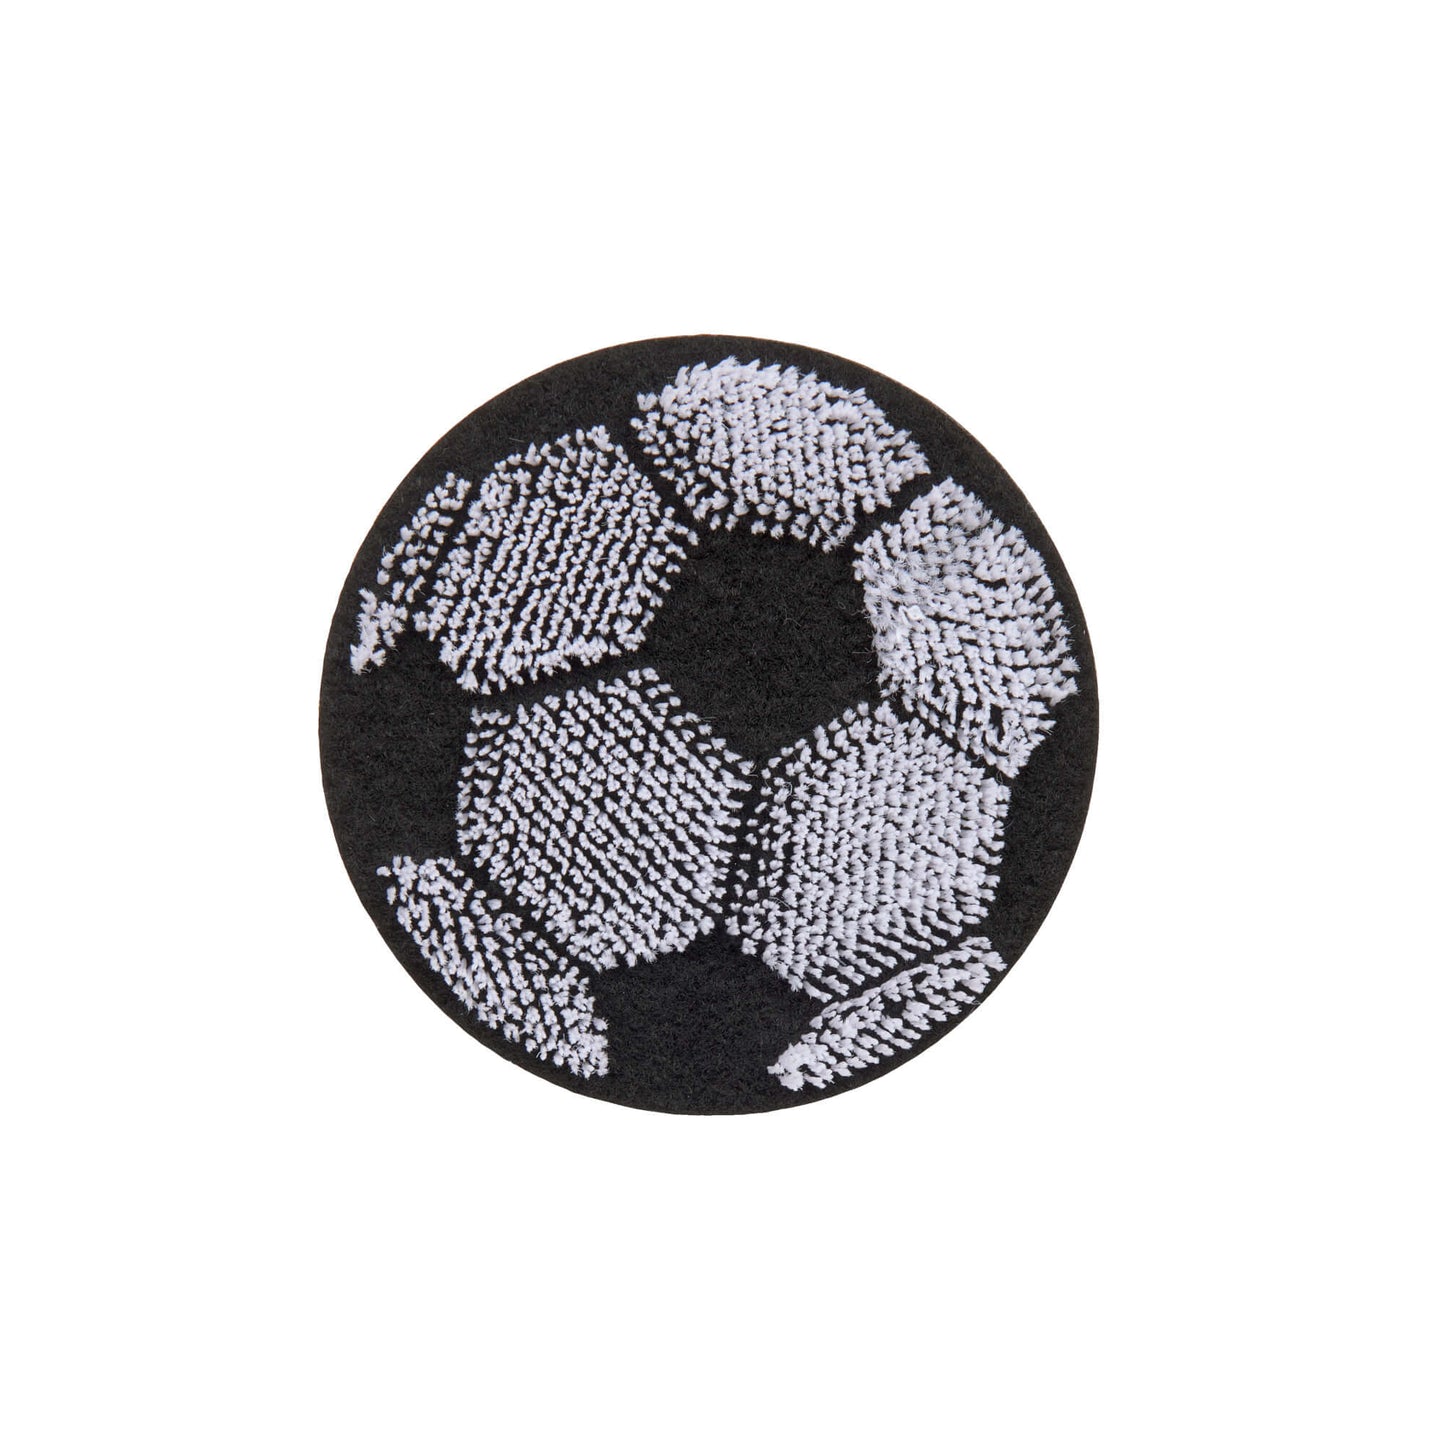 Textil-Sticker (3 Stk) - Schul Set Unique, Fussball